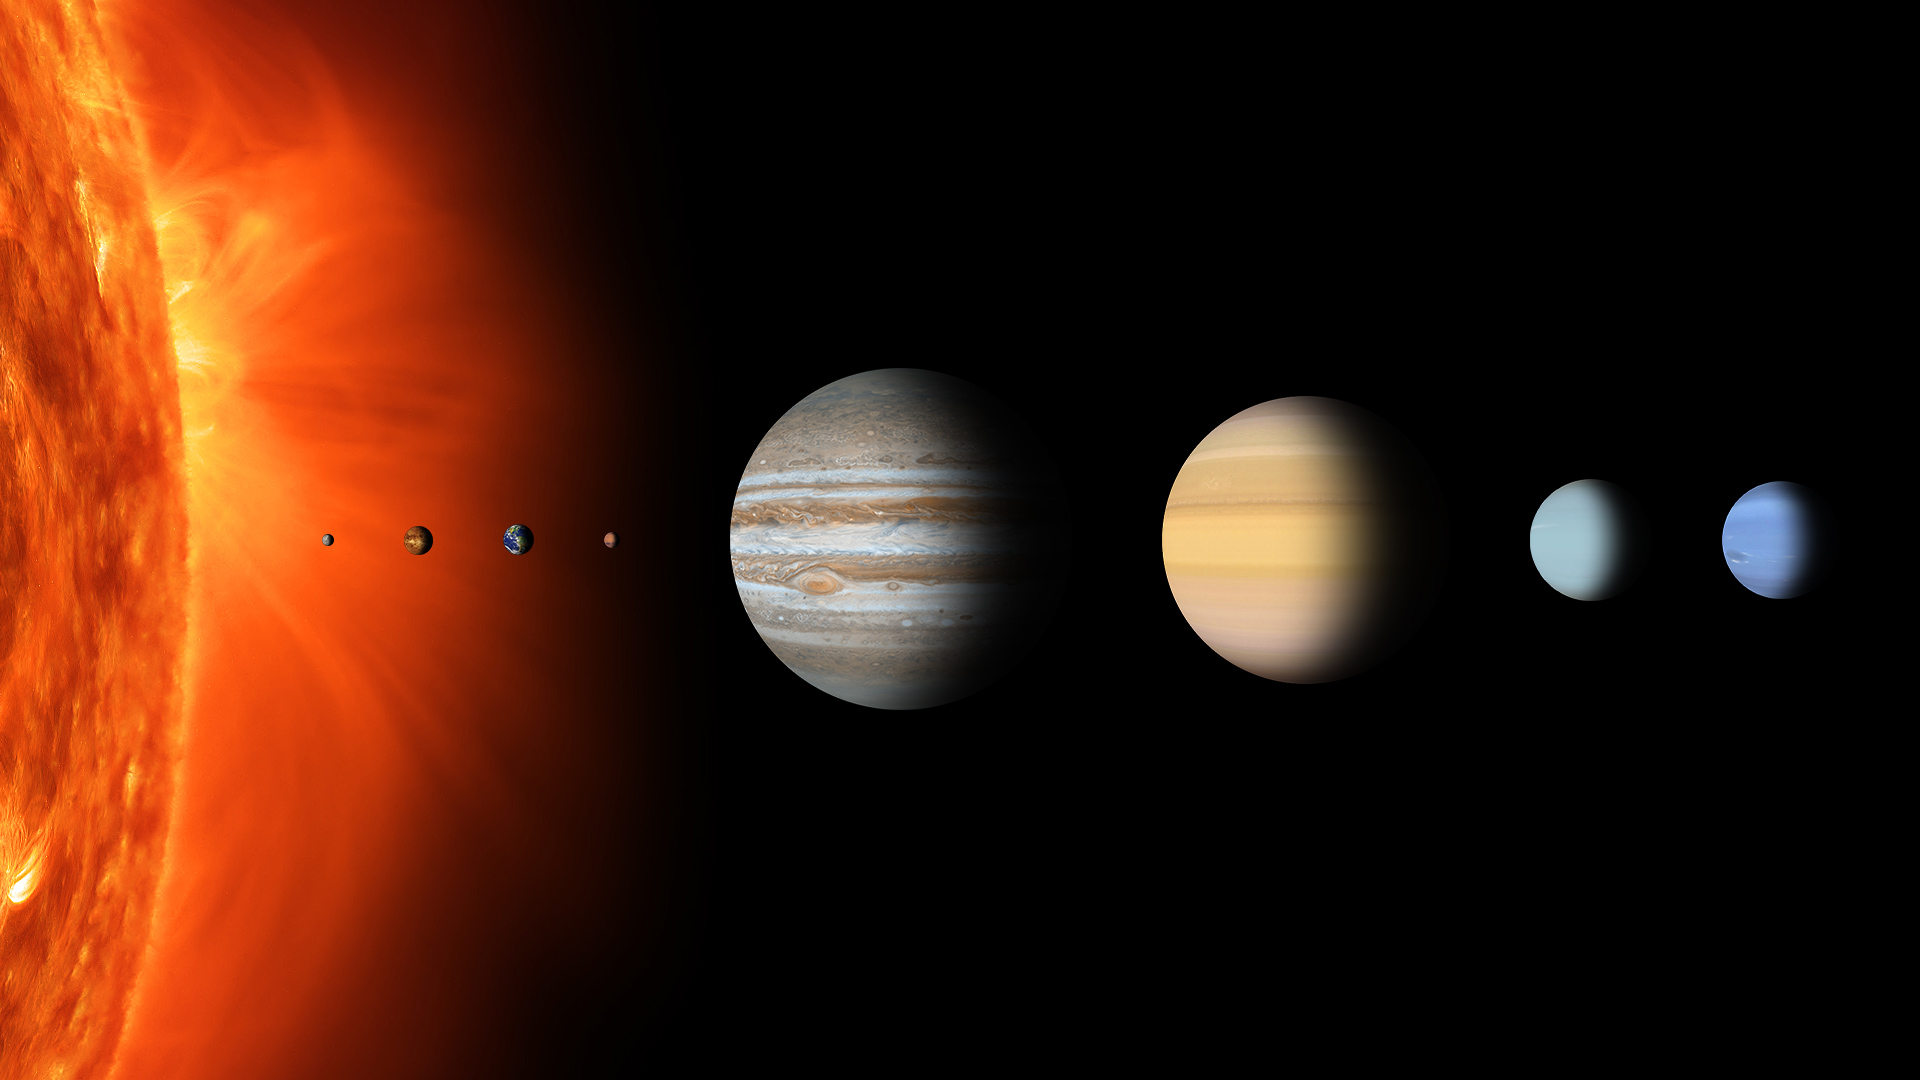 Sun Solar System Planet Mars Earth Venus Jupiter Mercury Saturn Neptune Uranus Space 1920x1080